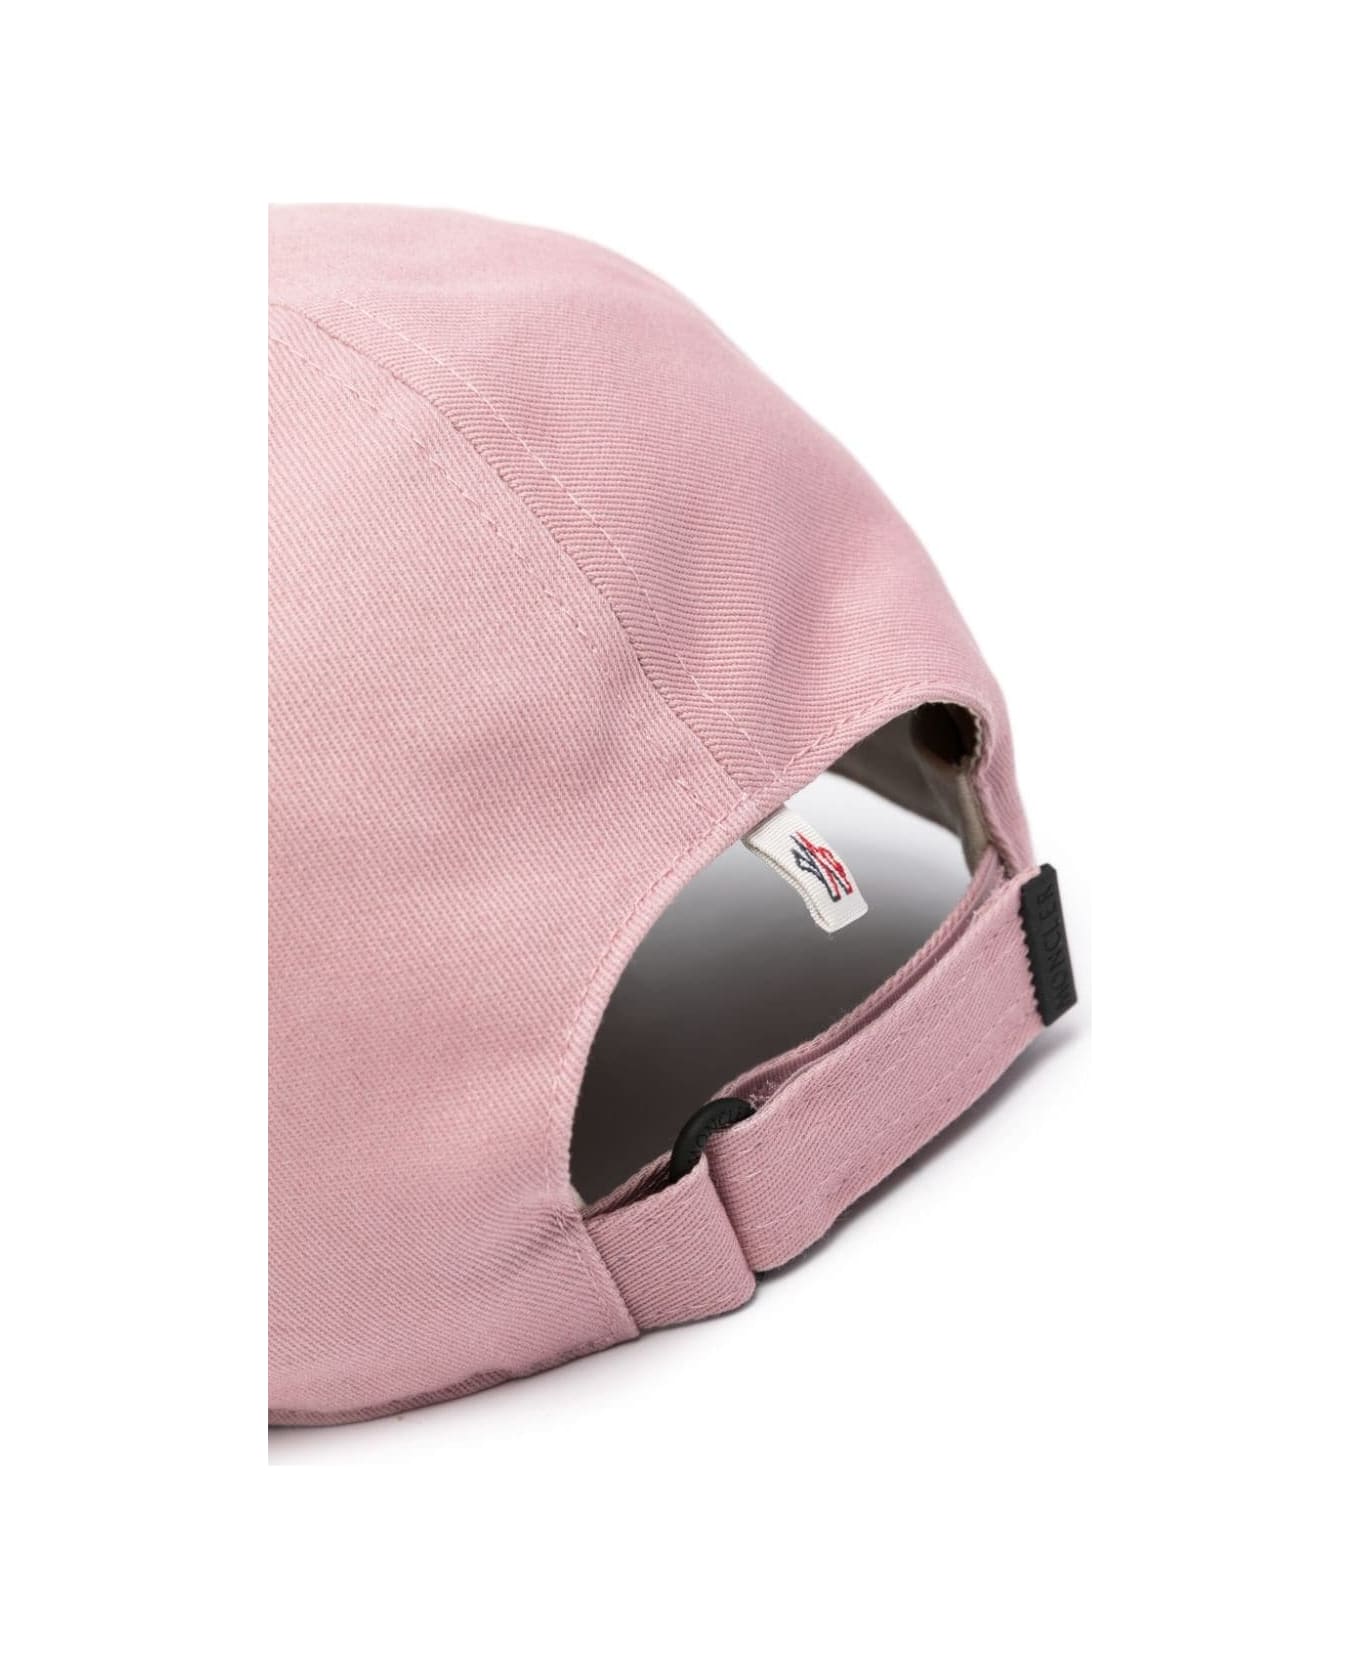 Moncler Grenoble Pink Baseball Hat With Embossed Logo - Pink 帽子